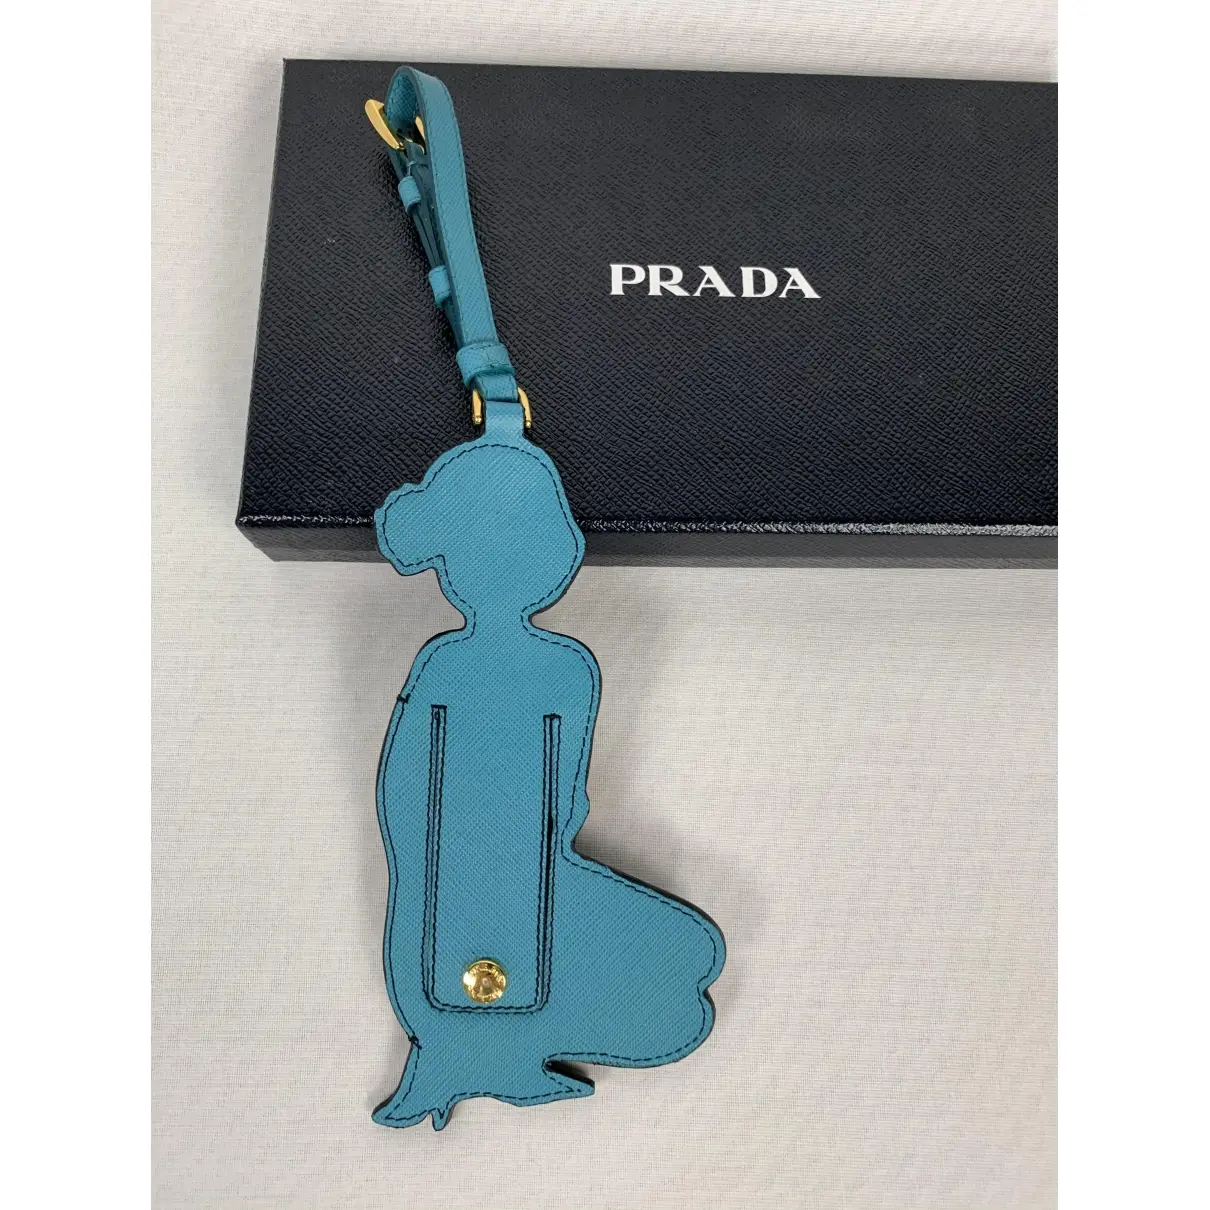 Buy Prada Leather bag charm online